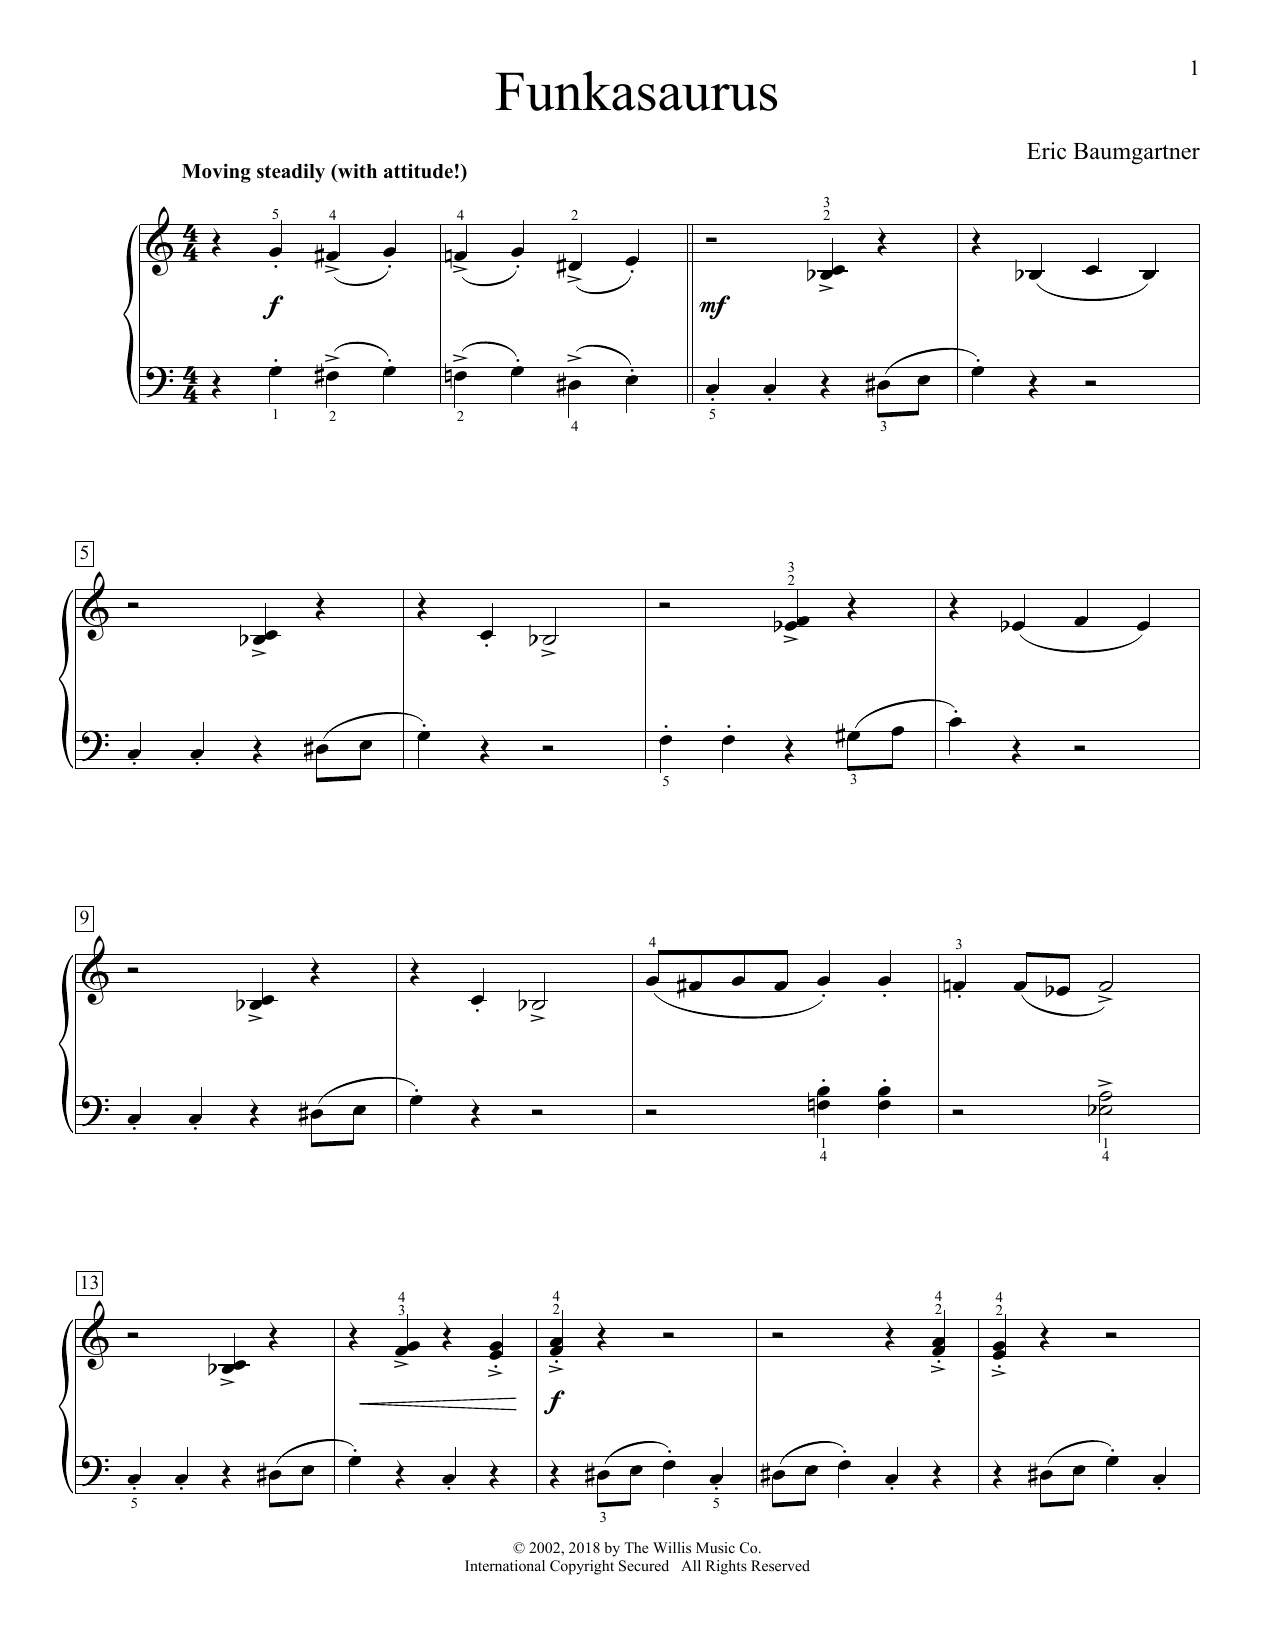 Eric Baumgartner Funkasaurus Sheet Music Notes & Chords for Educational Piano - Download or Print PDF